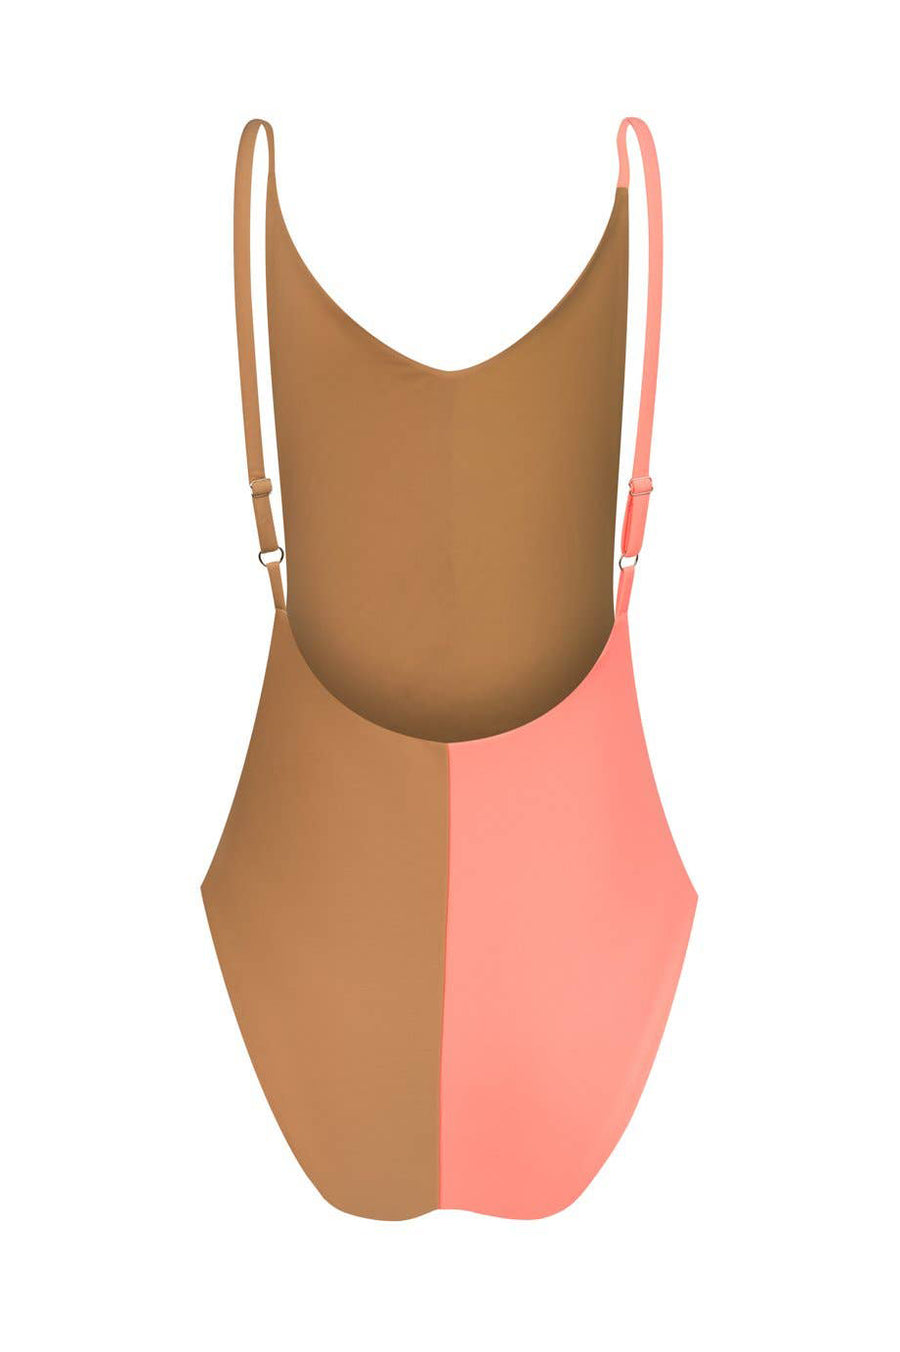 CEYLON swimsuit W Neon pink - HOLY SHE - HOWTOKiSSAFROG